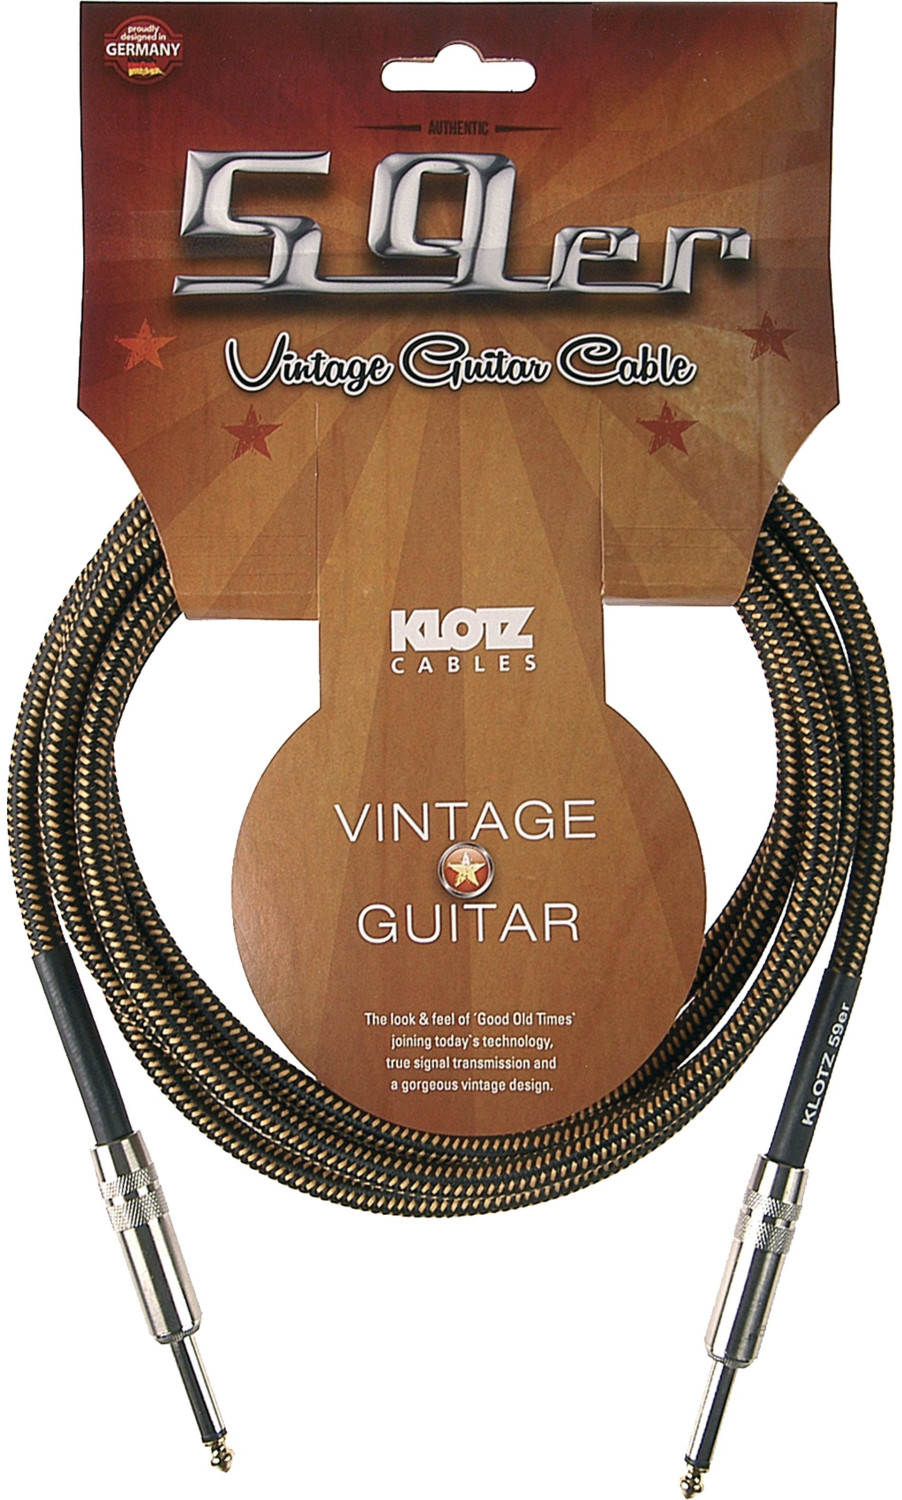 Photos - Cable (video, audio, USB) Klotz a-i-s Klotz Vintage Gitarrenkabel 6m gerade gelb/schwarz